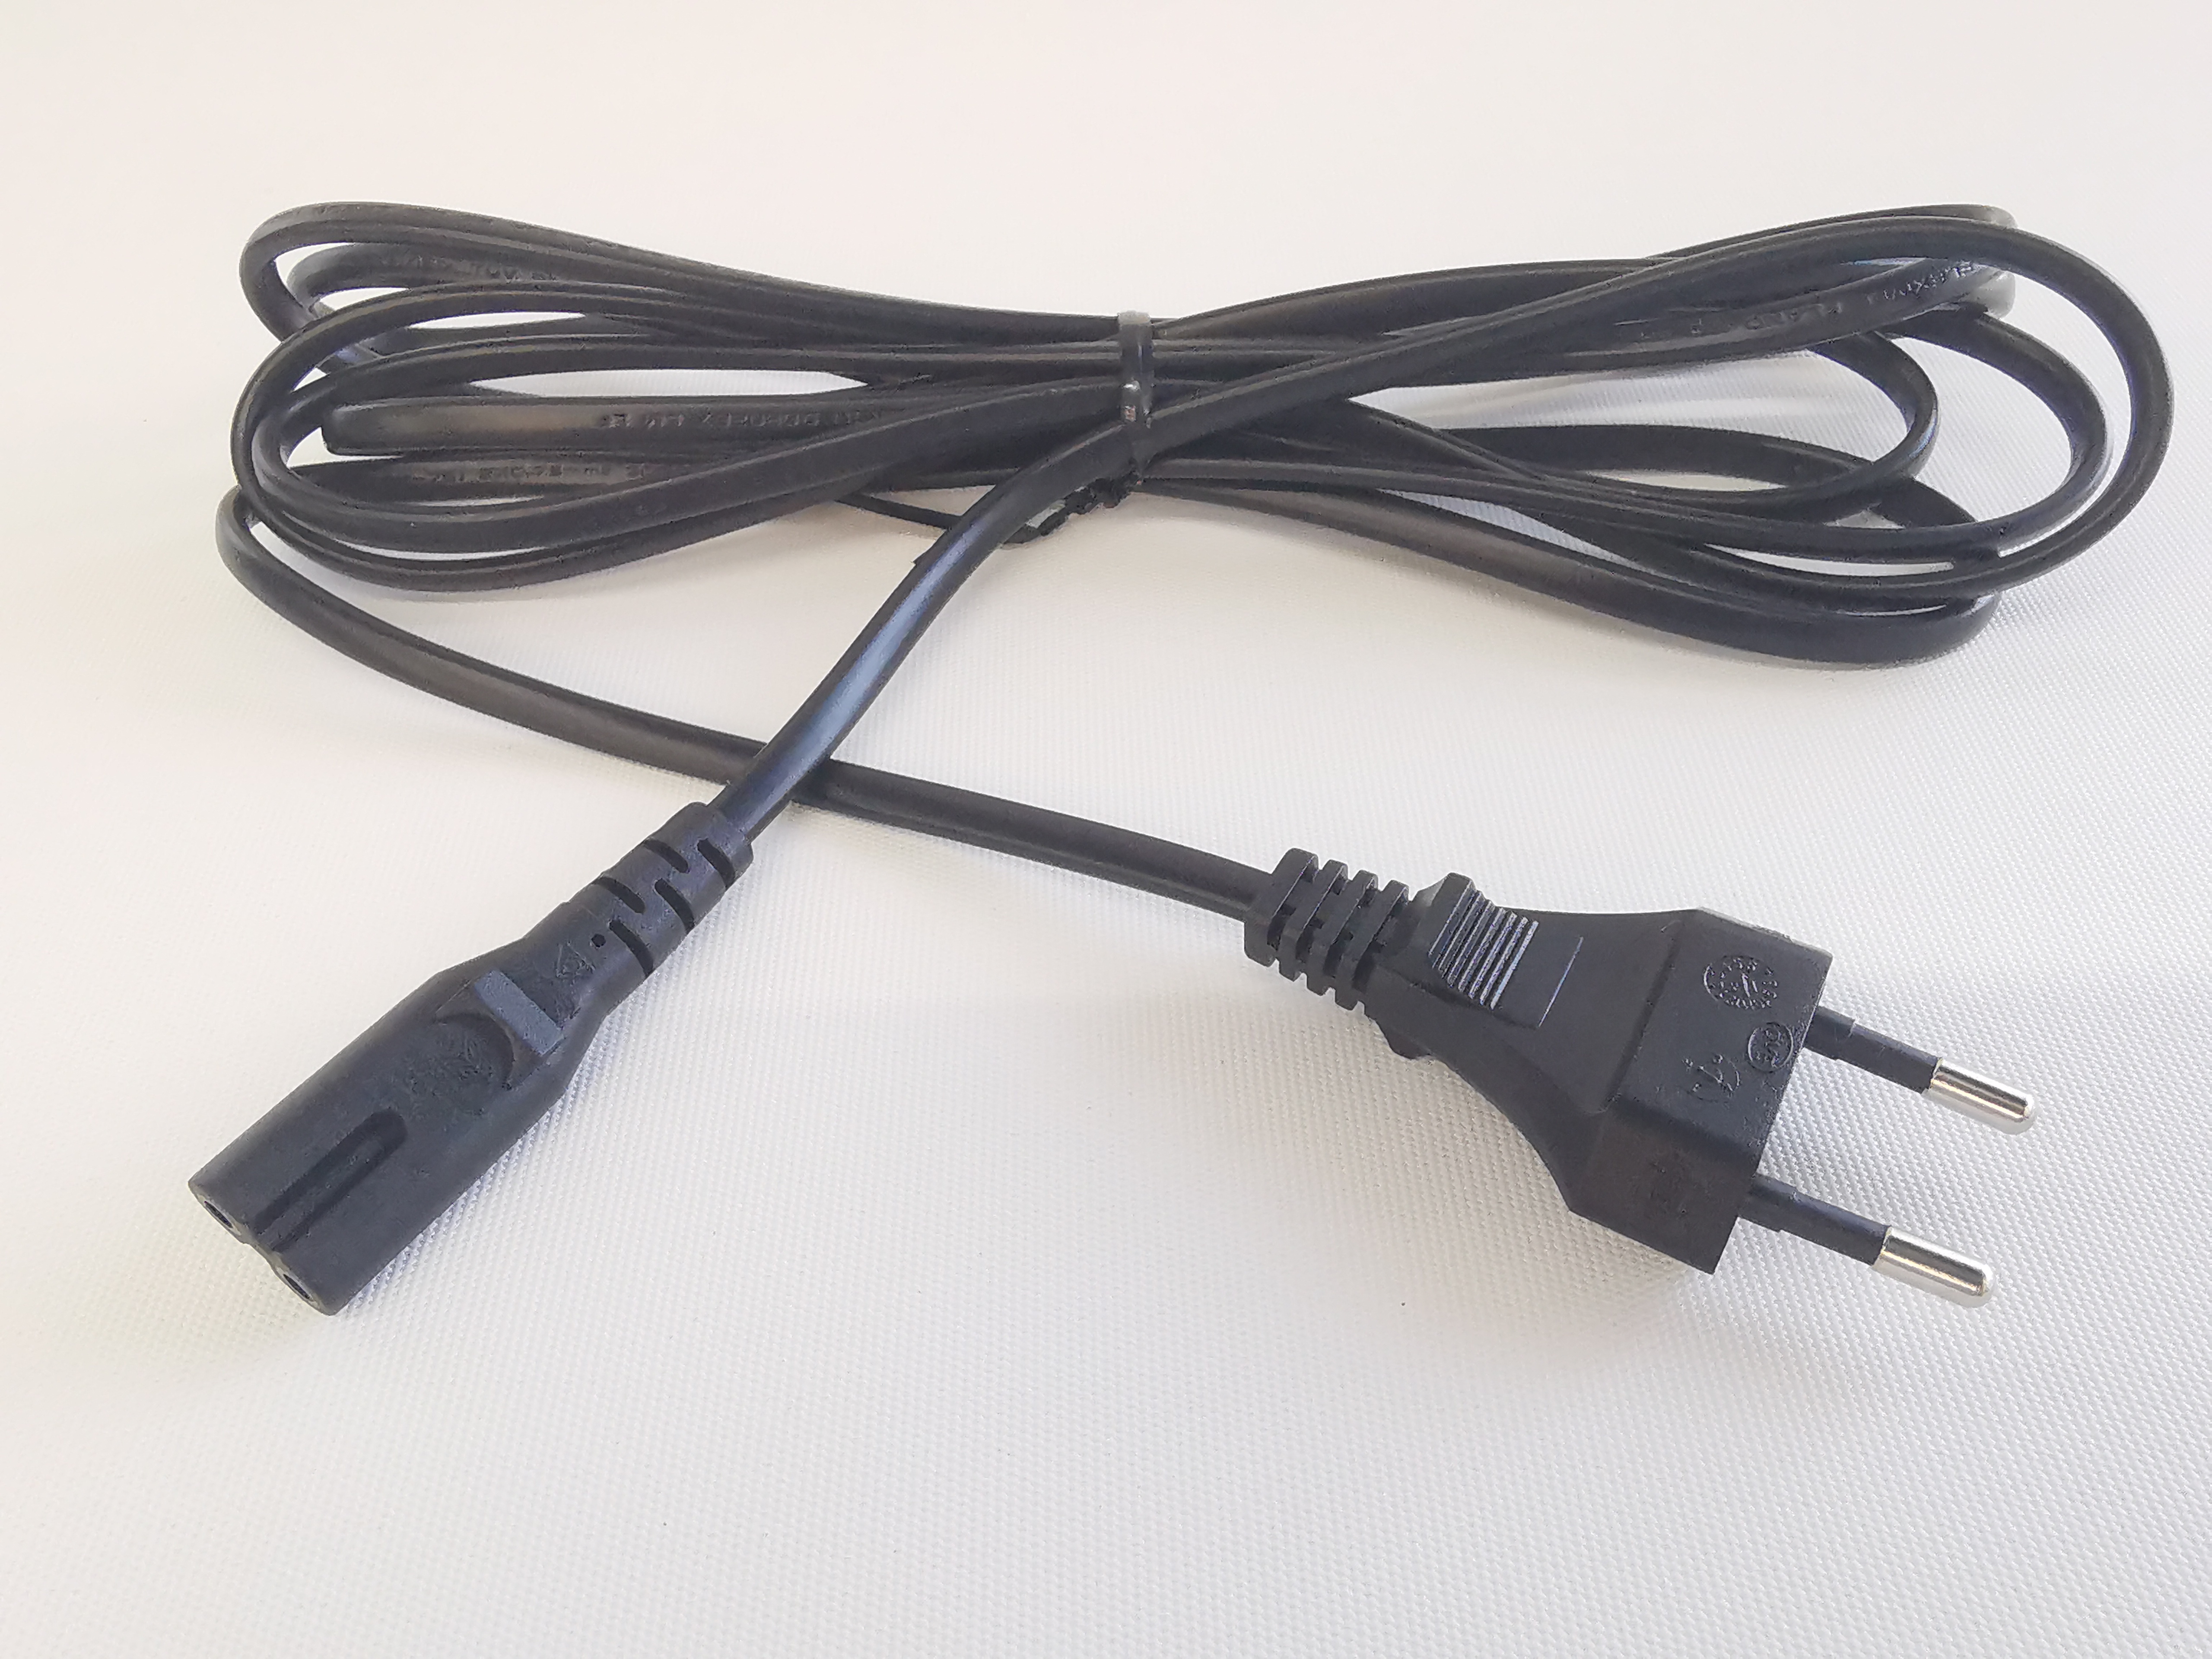 2 Pin European Plug (Type C) to C7 Cable 2.5m